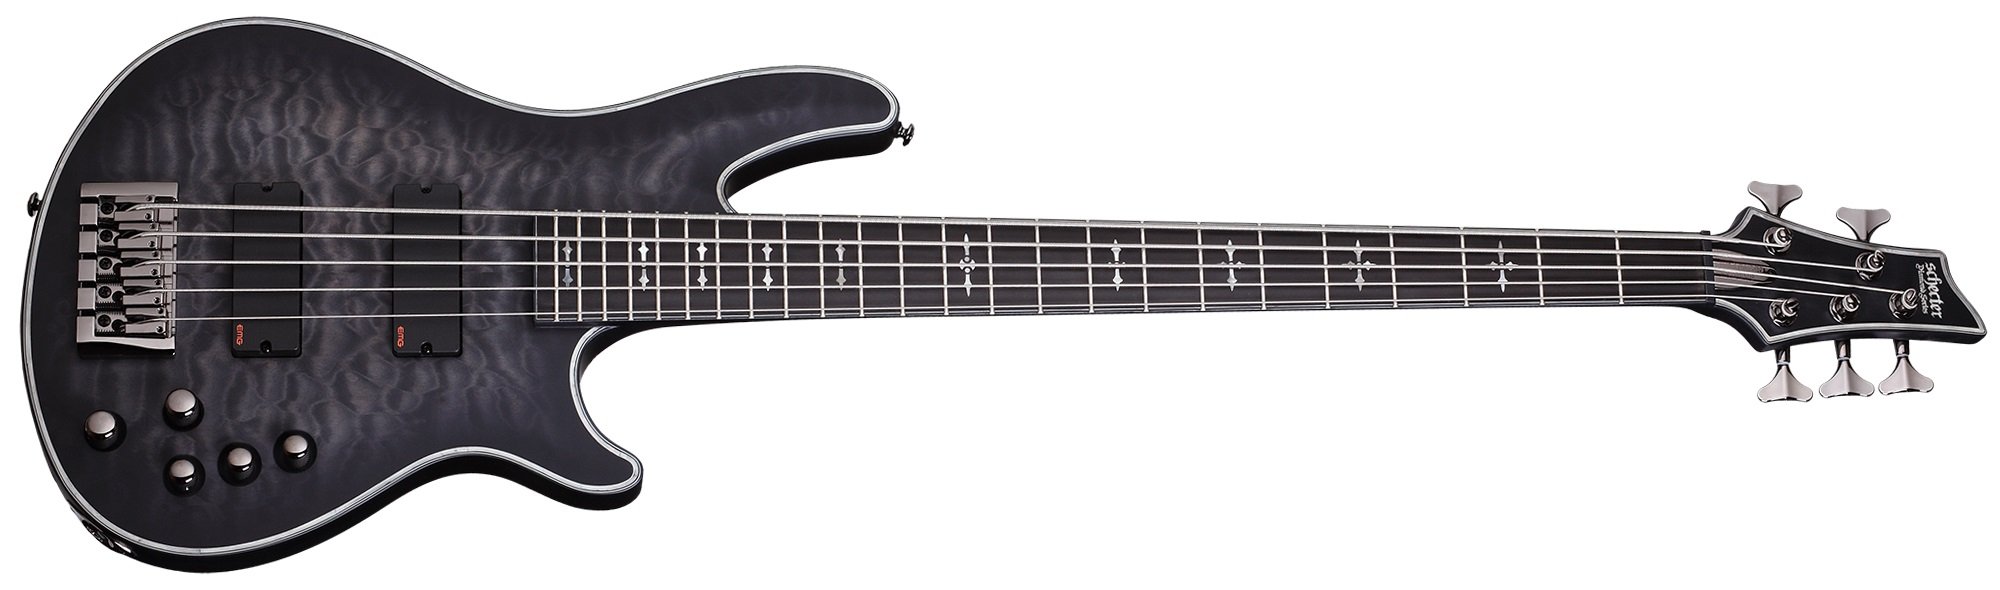 Schecter HR-EXTREME-BASS5 Hellraiser Extreme-5 5 string Hellraiser Bass Guitar - CRIMSON RED BURST SATIN (CRBS) for sale